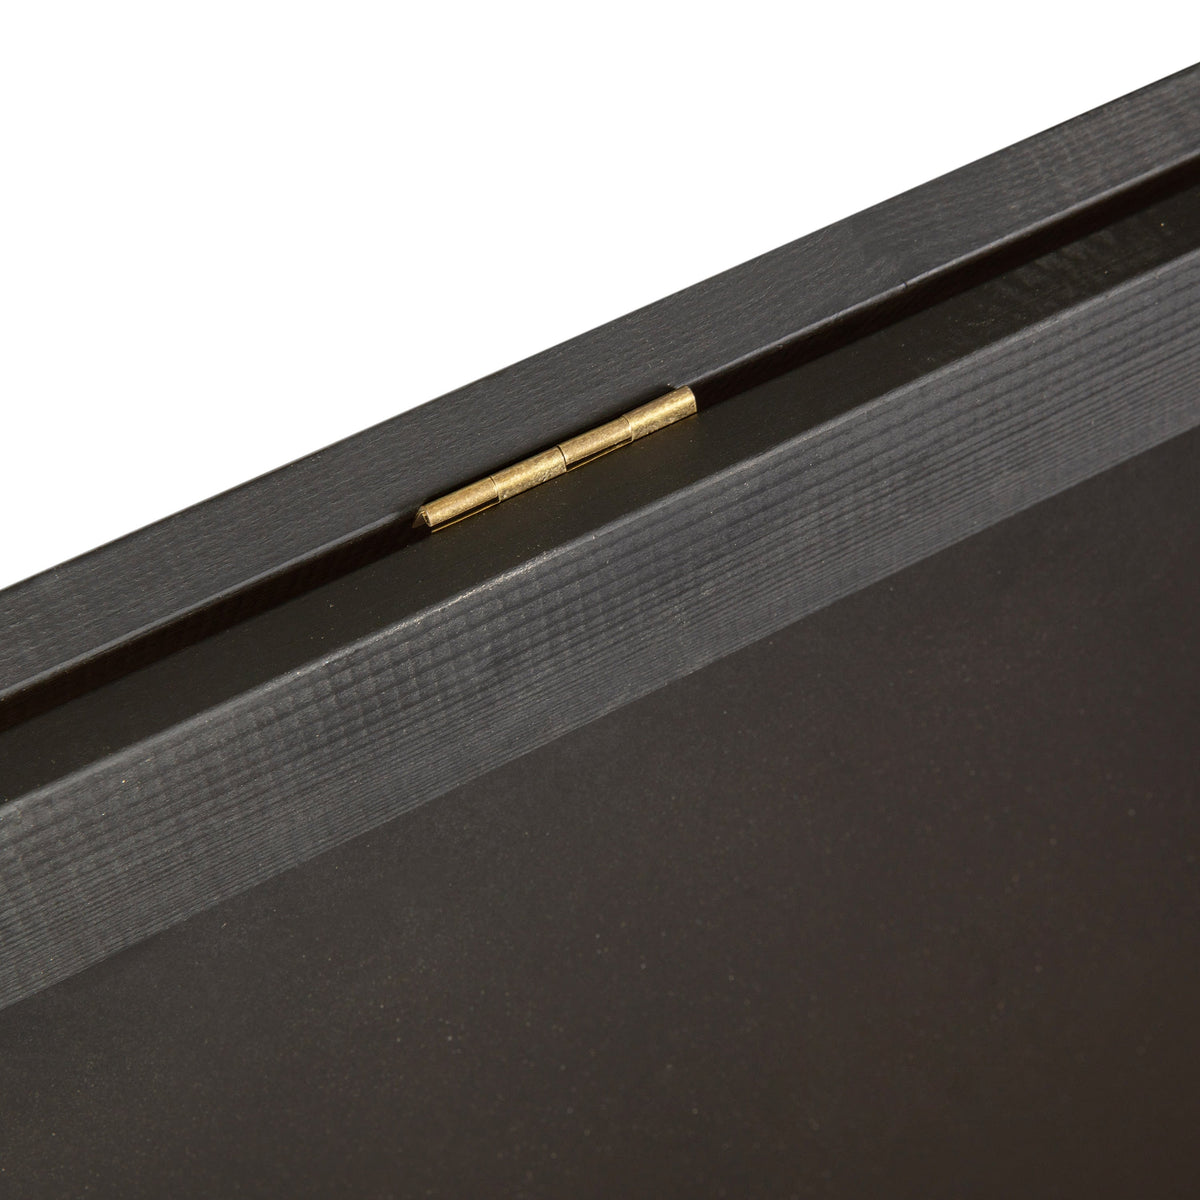 Black,30inchH x 20inchW |#| Indoor/Outdoor 30x20 Freestanding Black Wood A-Frame Magnetic Chalkboard